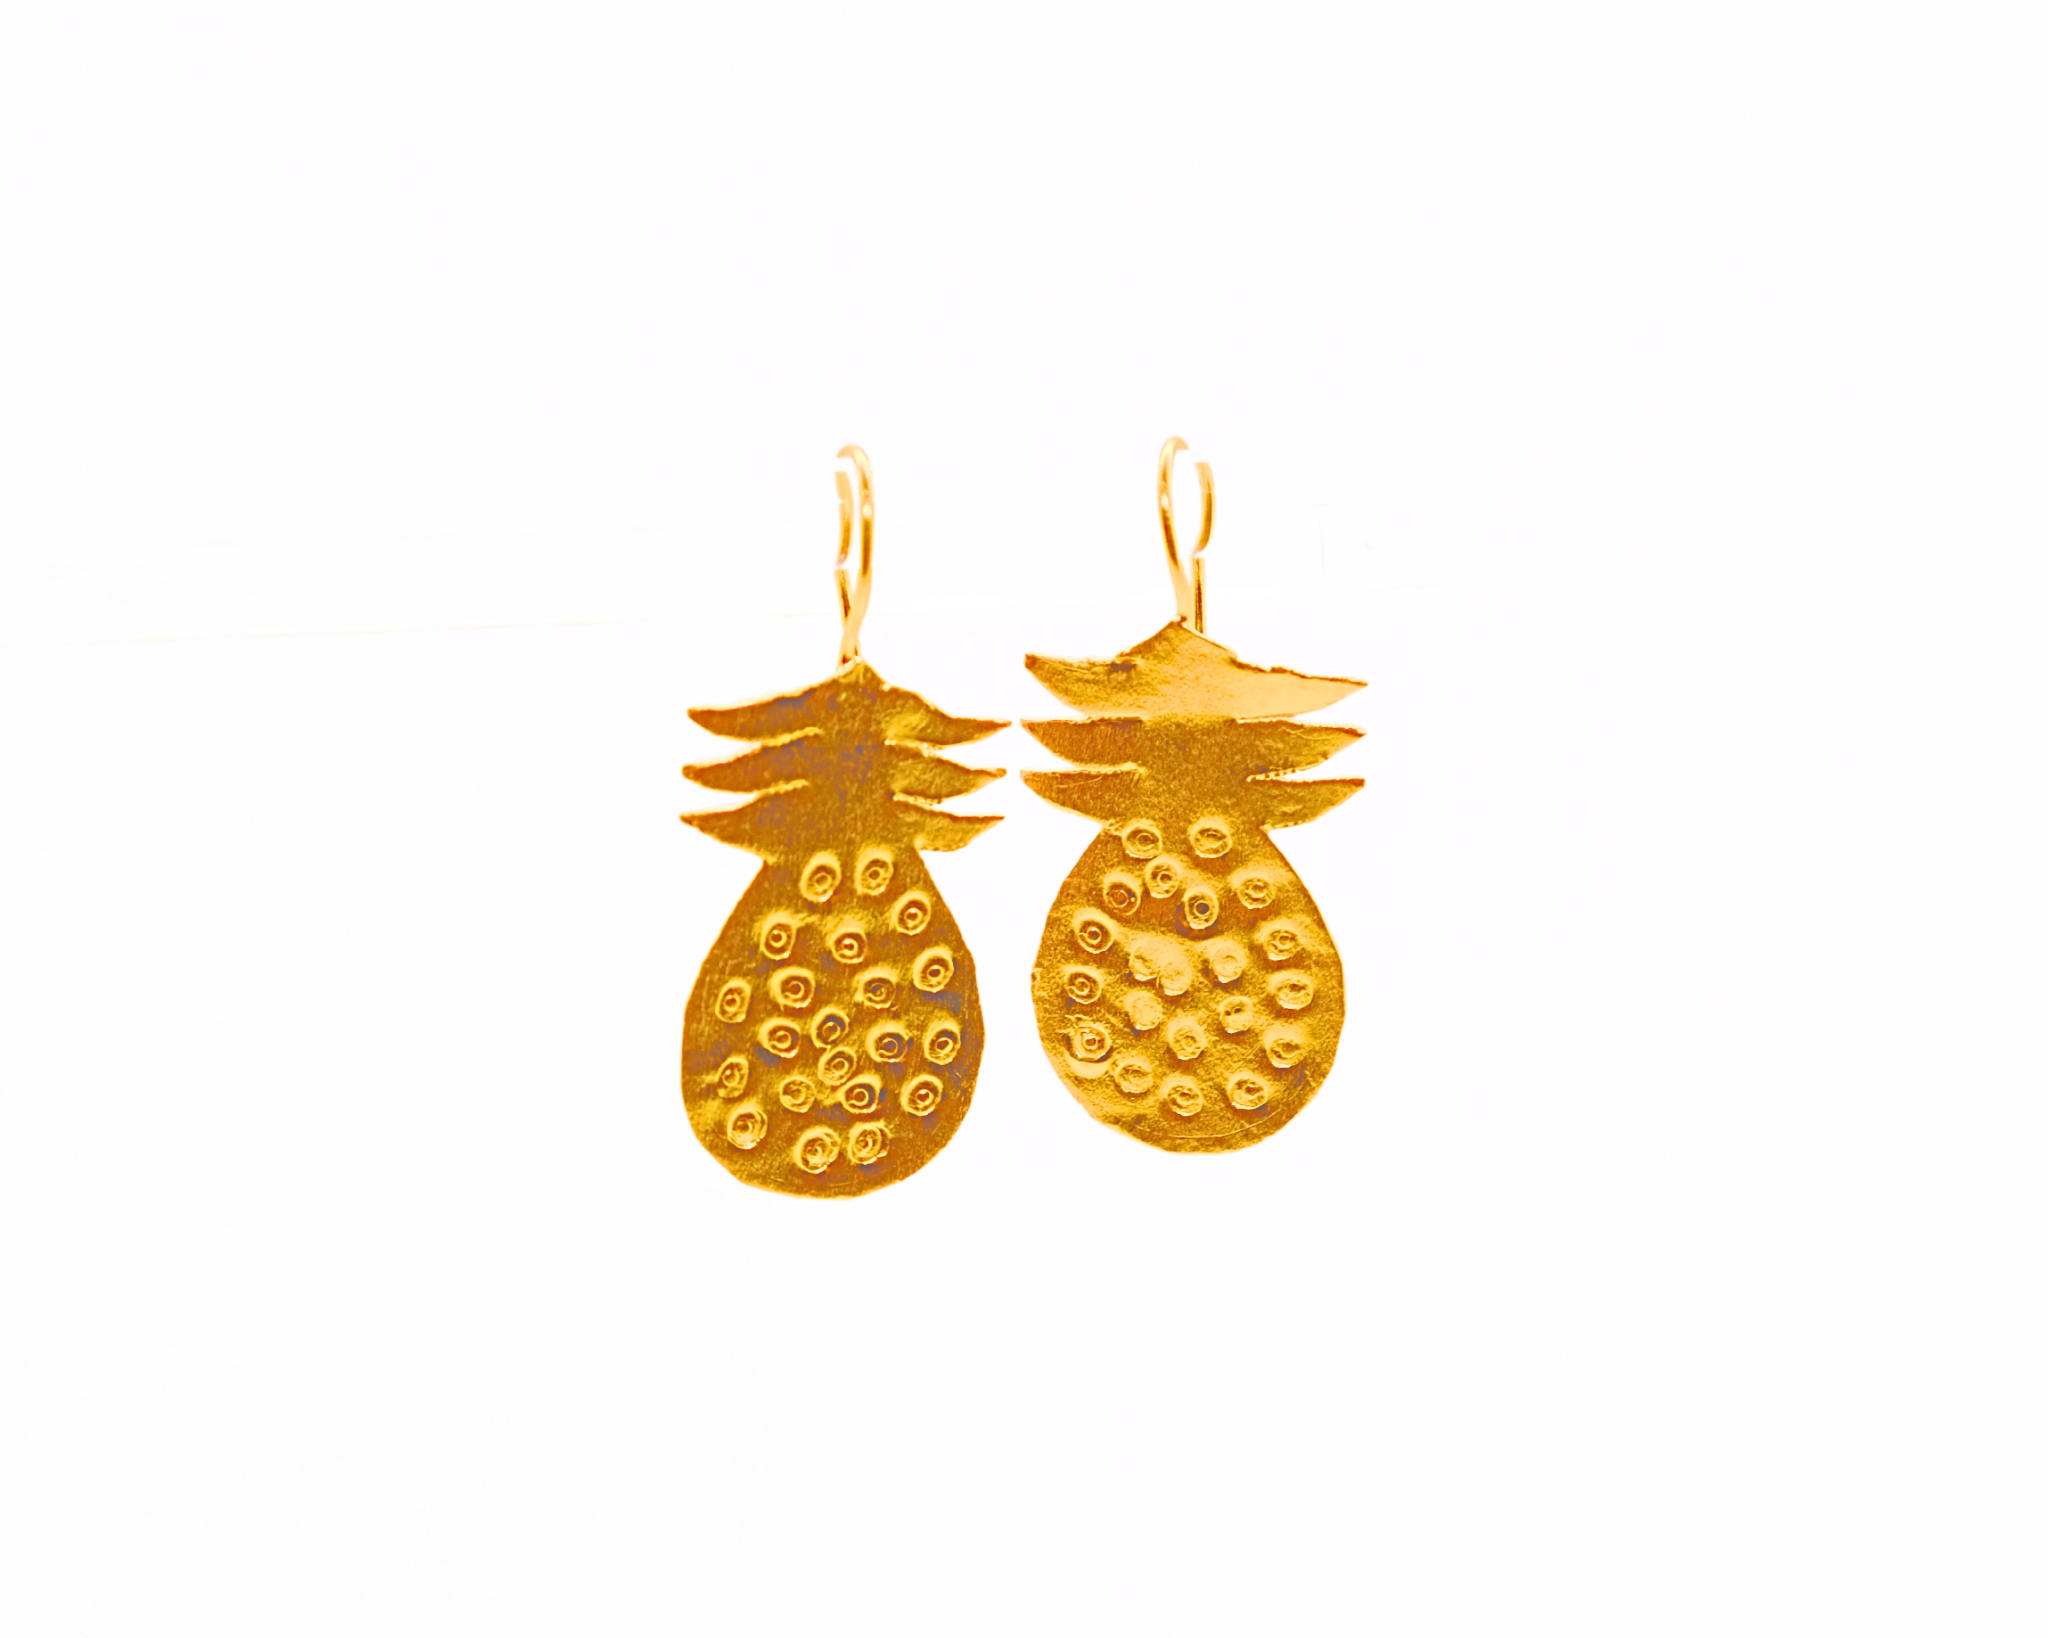 Ananas Earrings Earrings Hattus Jewelry